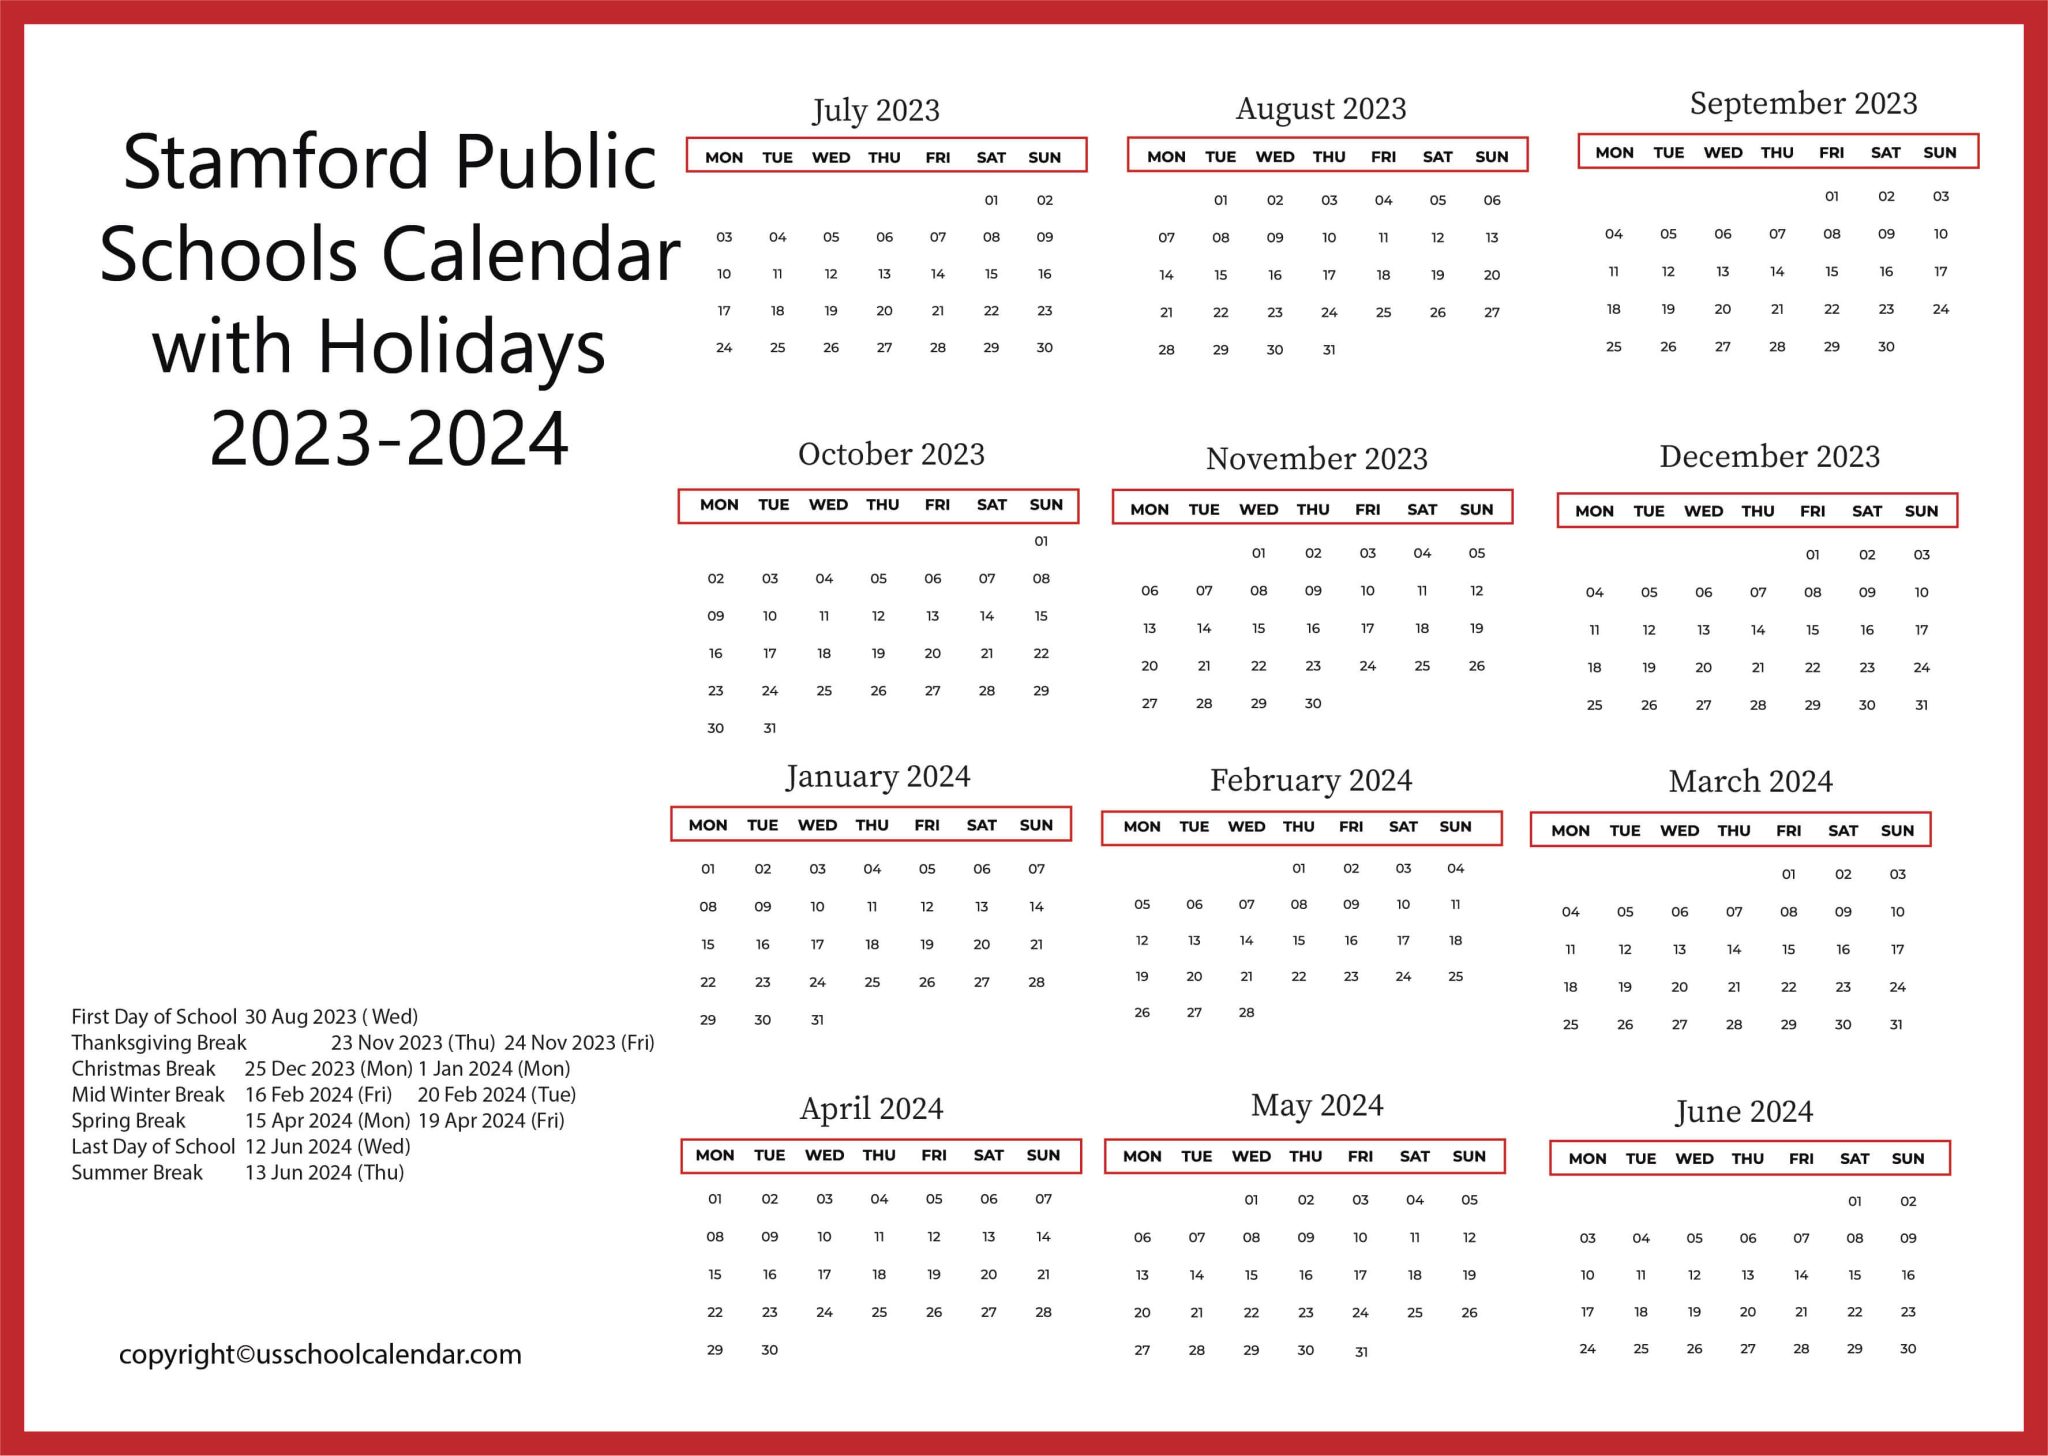 Stamford Public Schools Calendar with Holidays 2023 2024